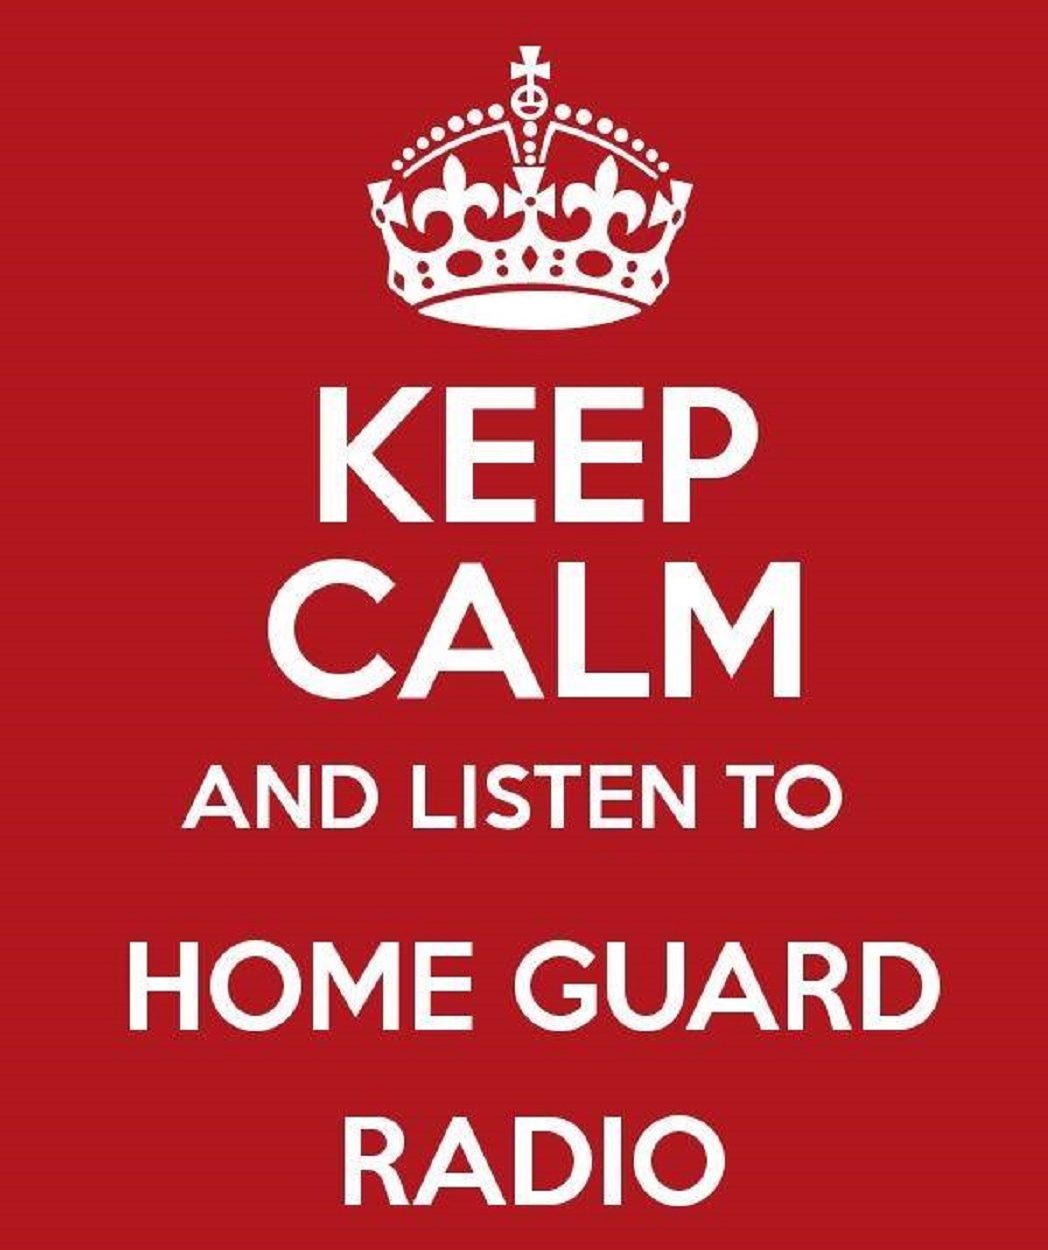 Home Guard Radio